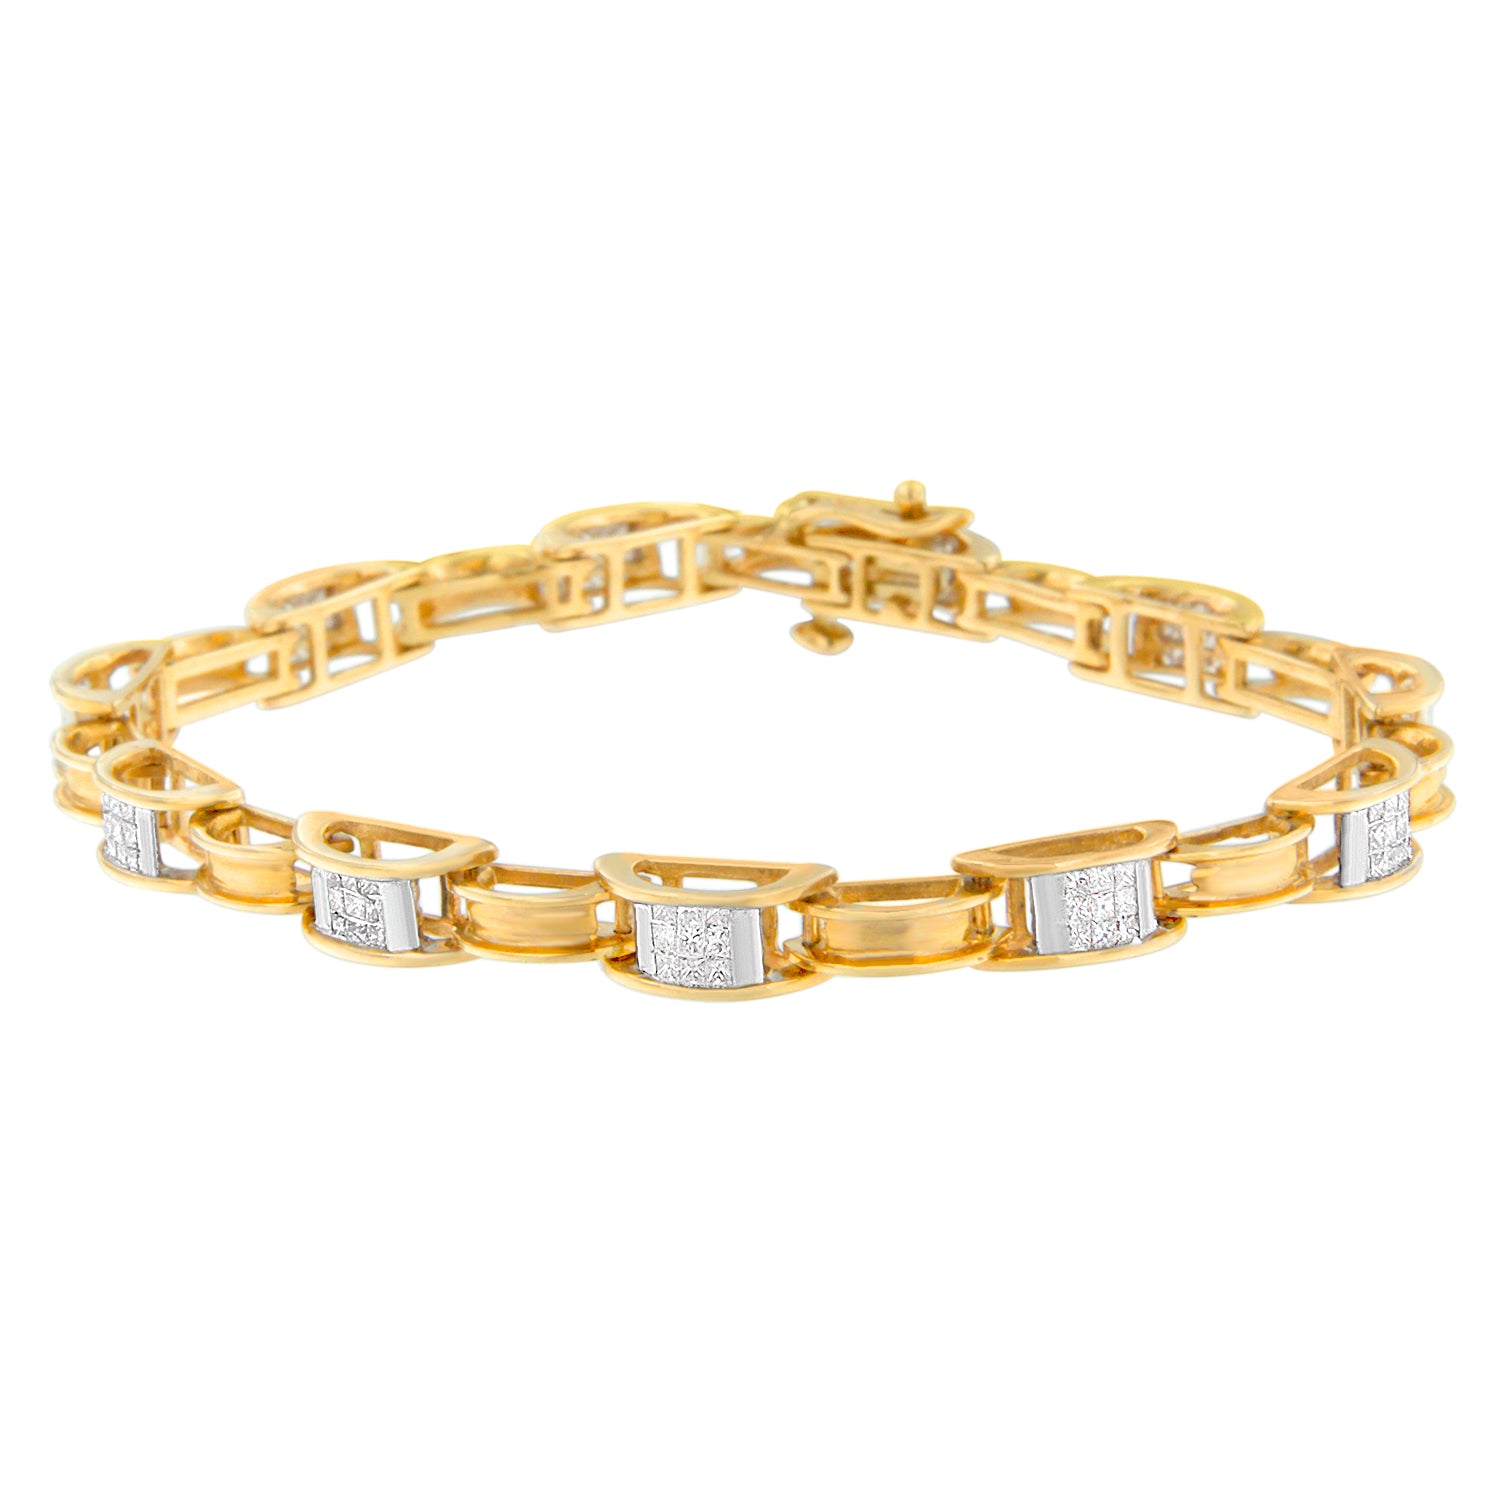 14K Yellow Gold Princess Cut Diamond Chain Link Bracelet 1.00 cttw